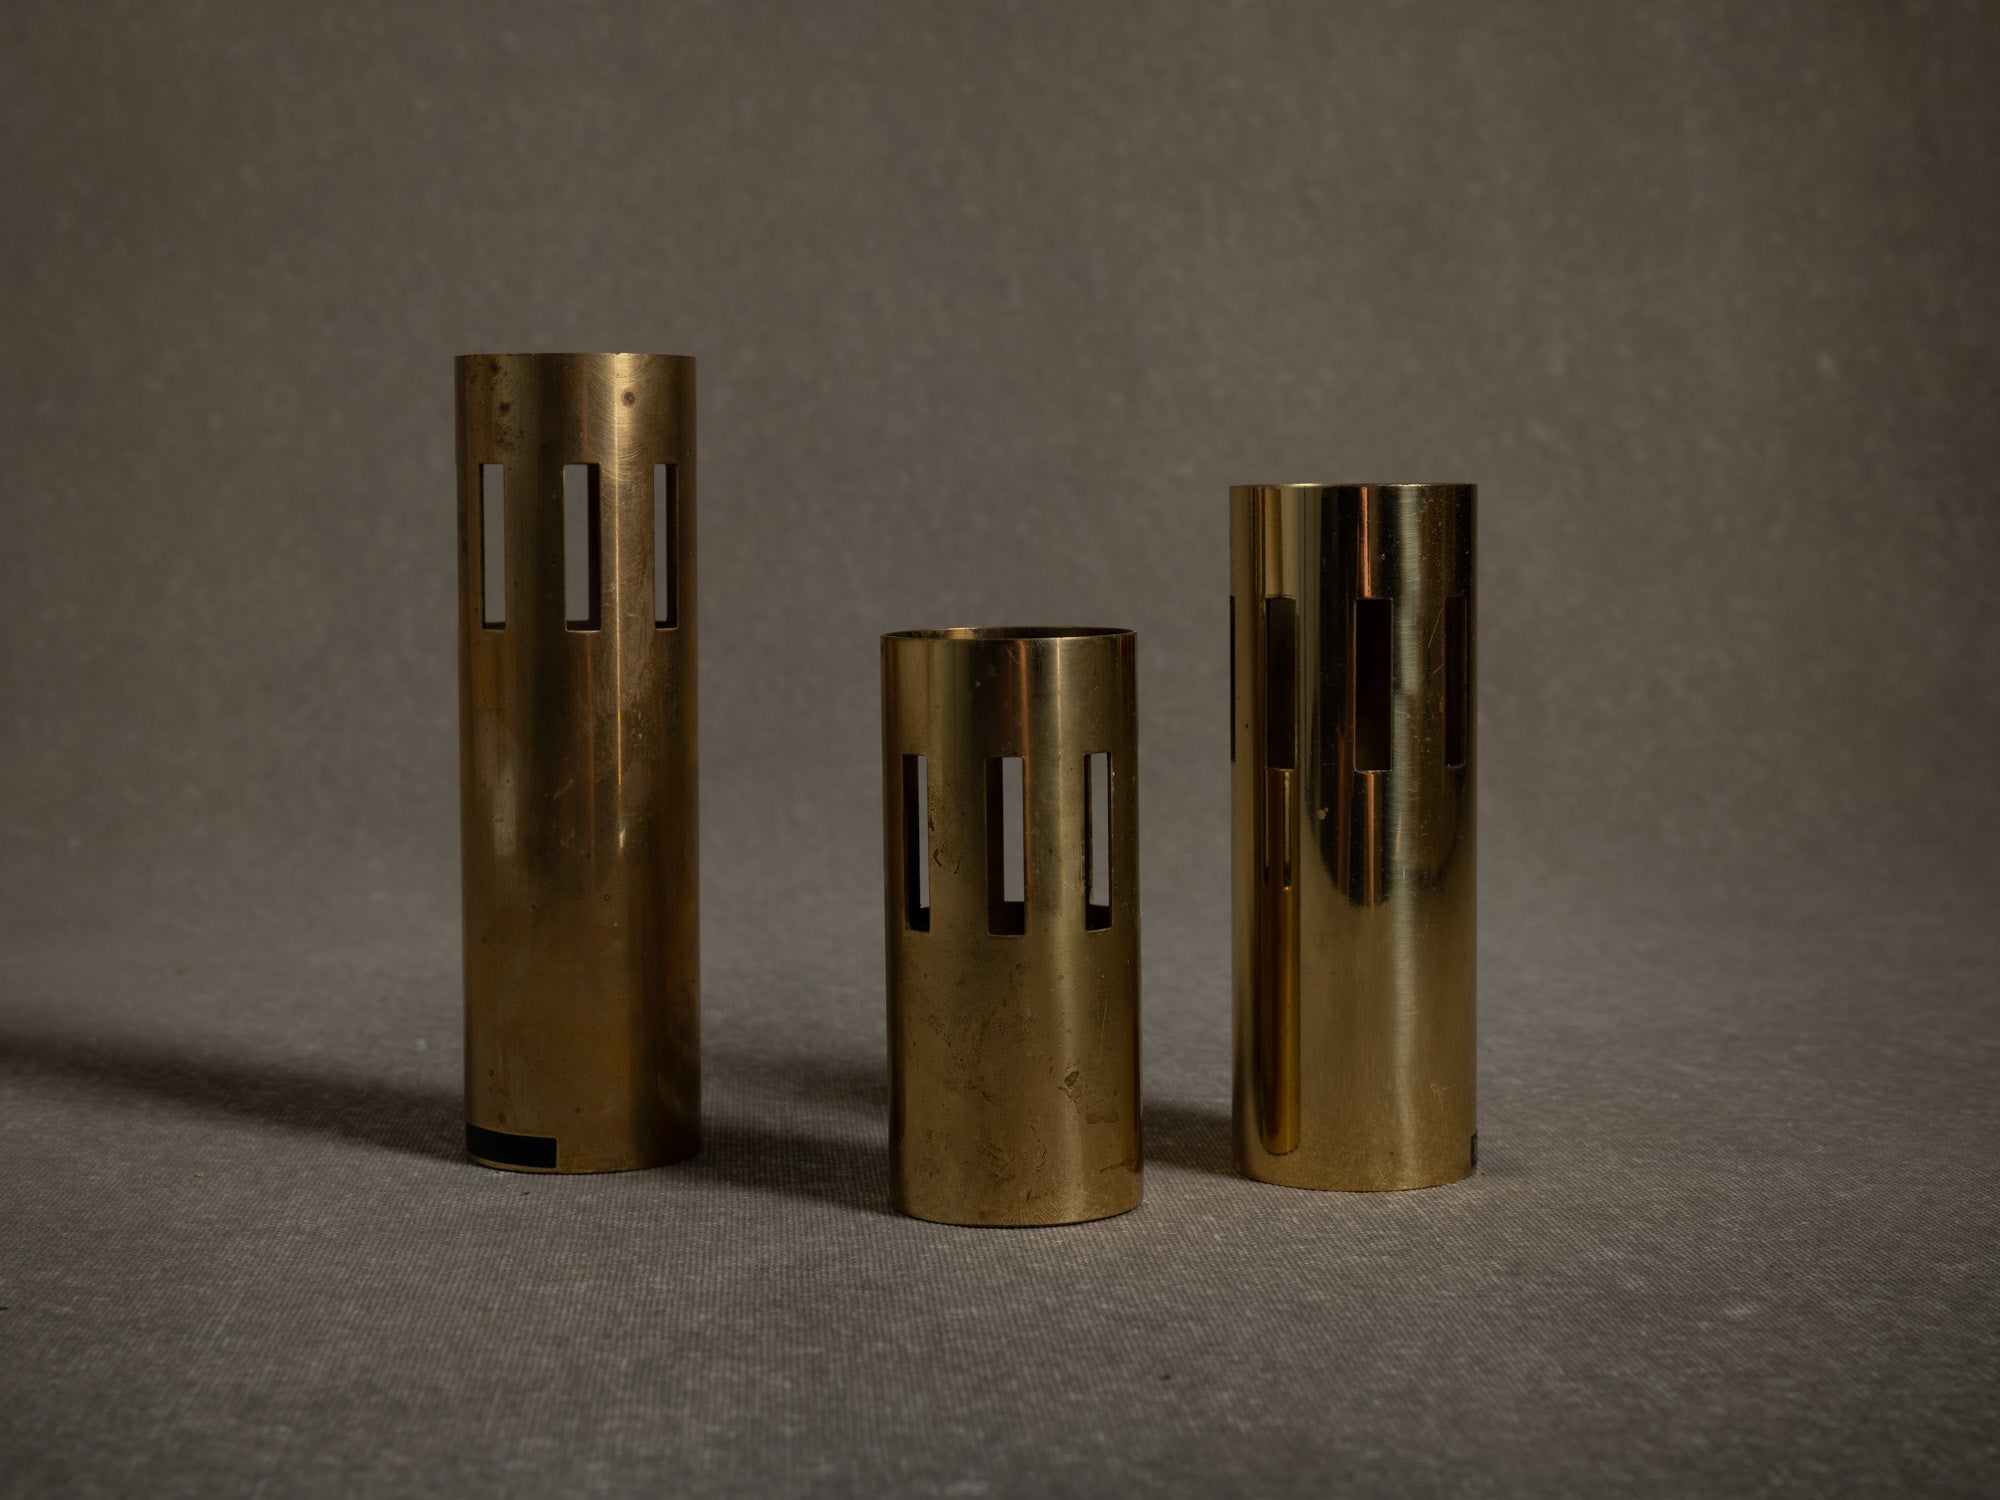 Ensemble de 3 photophores en laiton par Kullamässing, Suède (vers 1965-70)..Set of 3 brass tealight holders by Kullamässing, Sweden (circa 1965-70)